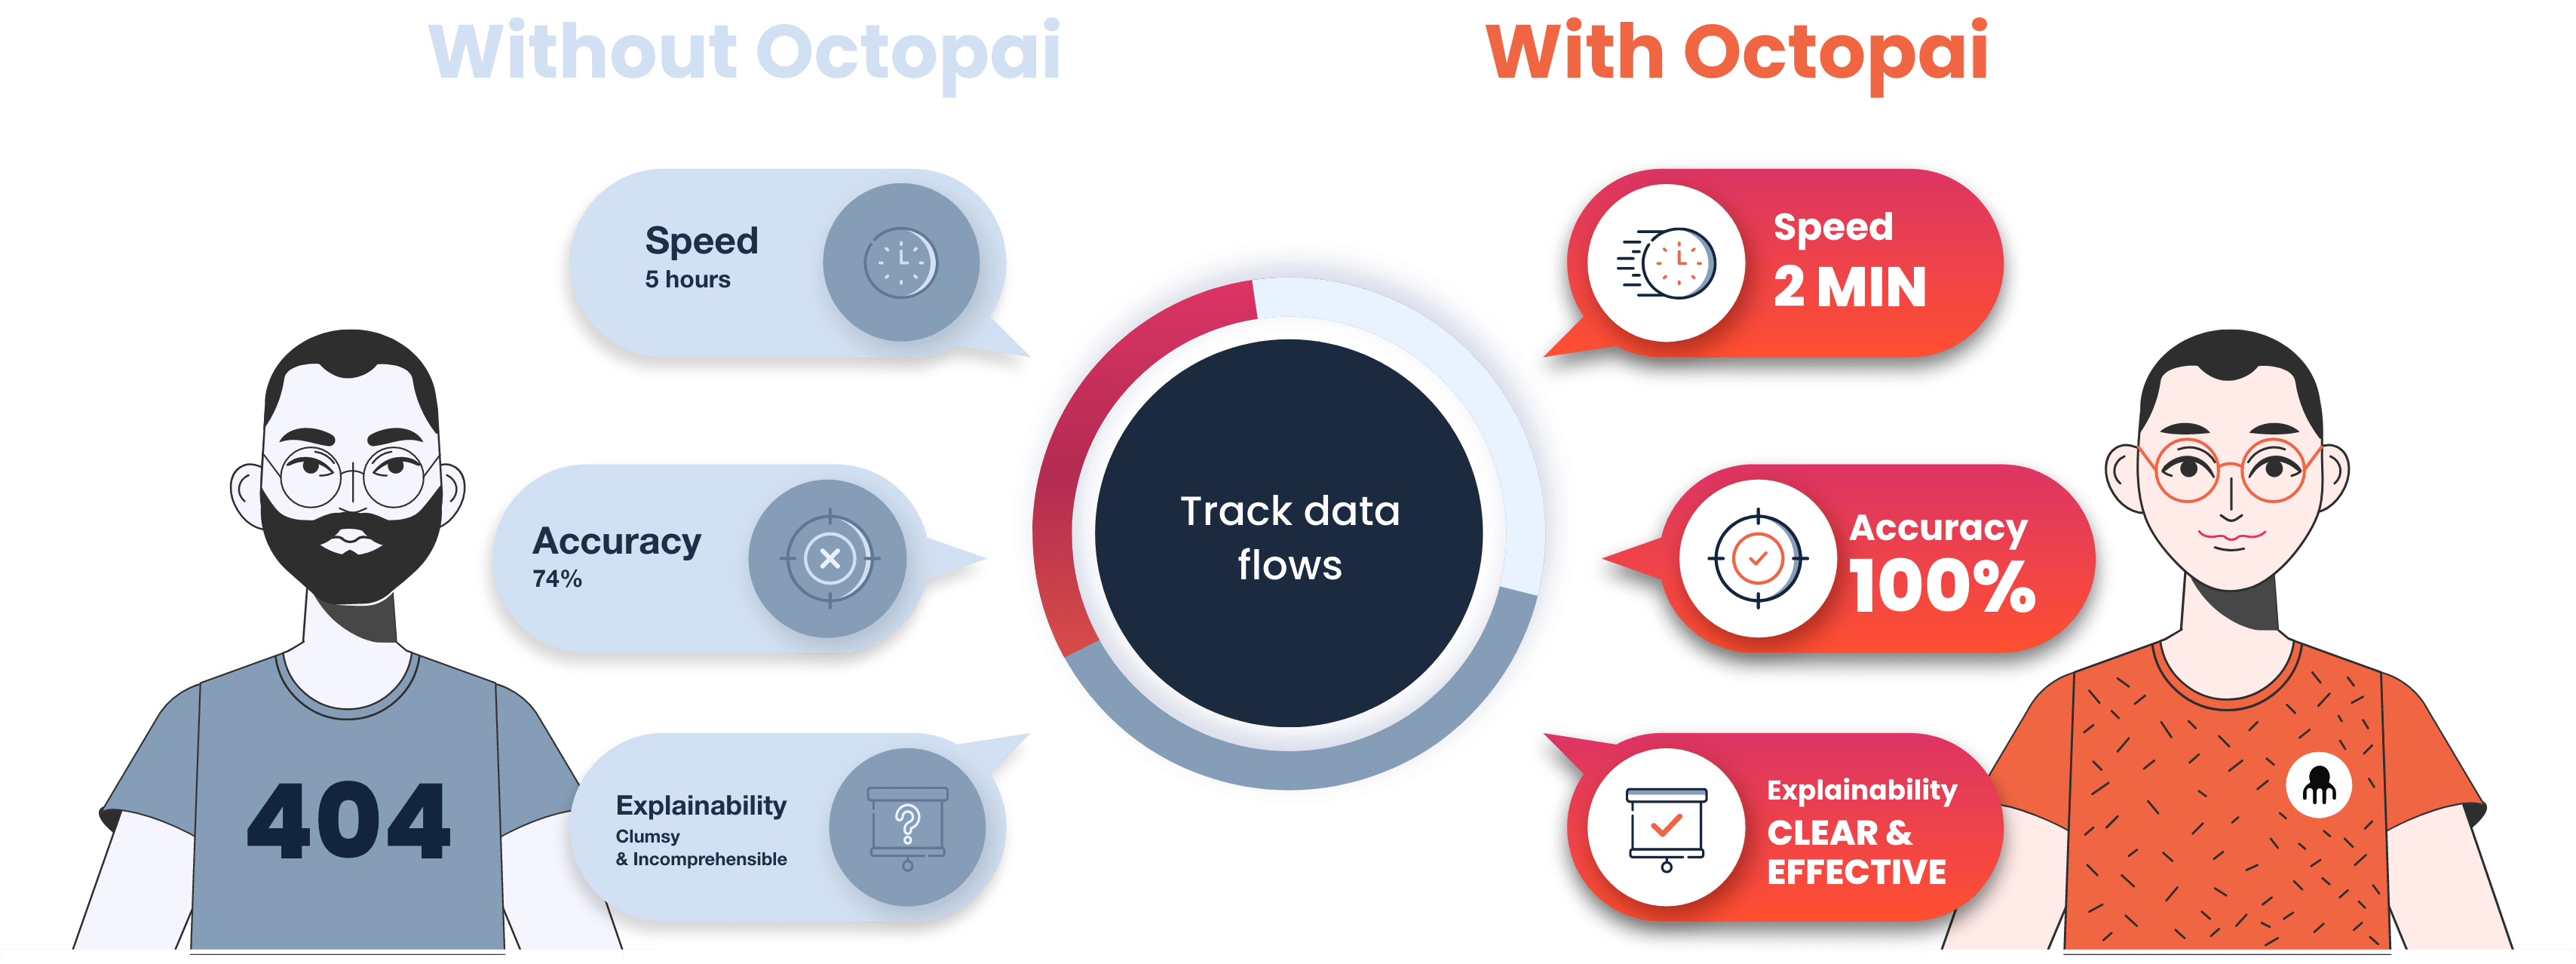 Track data flows